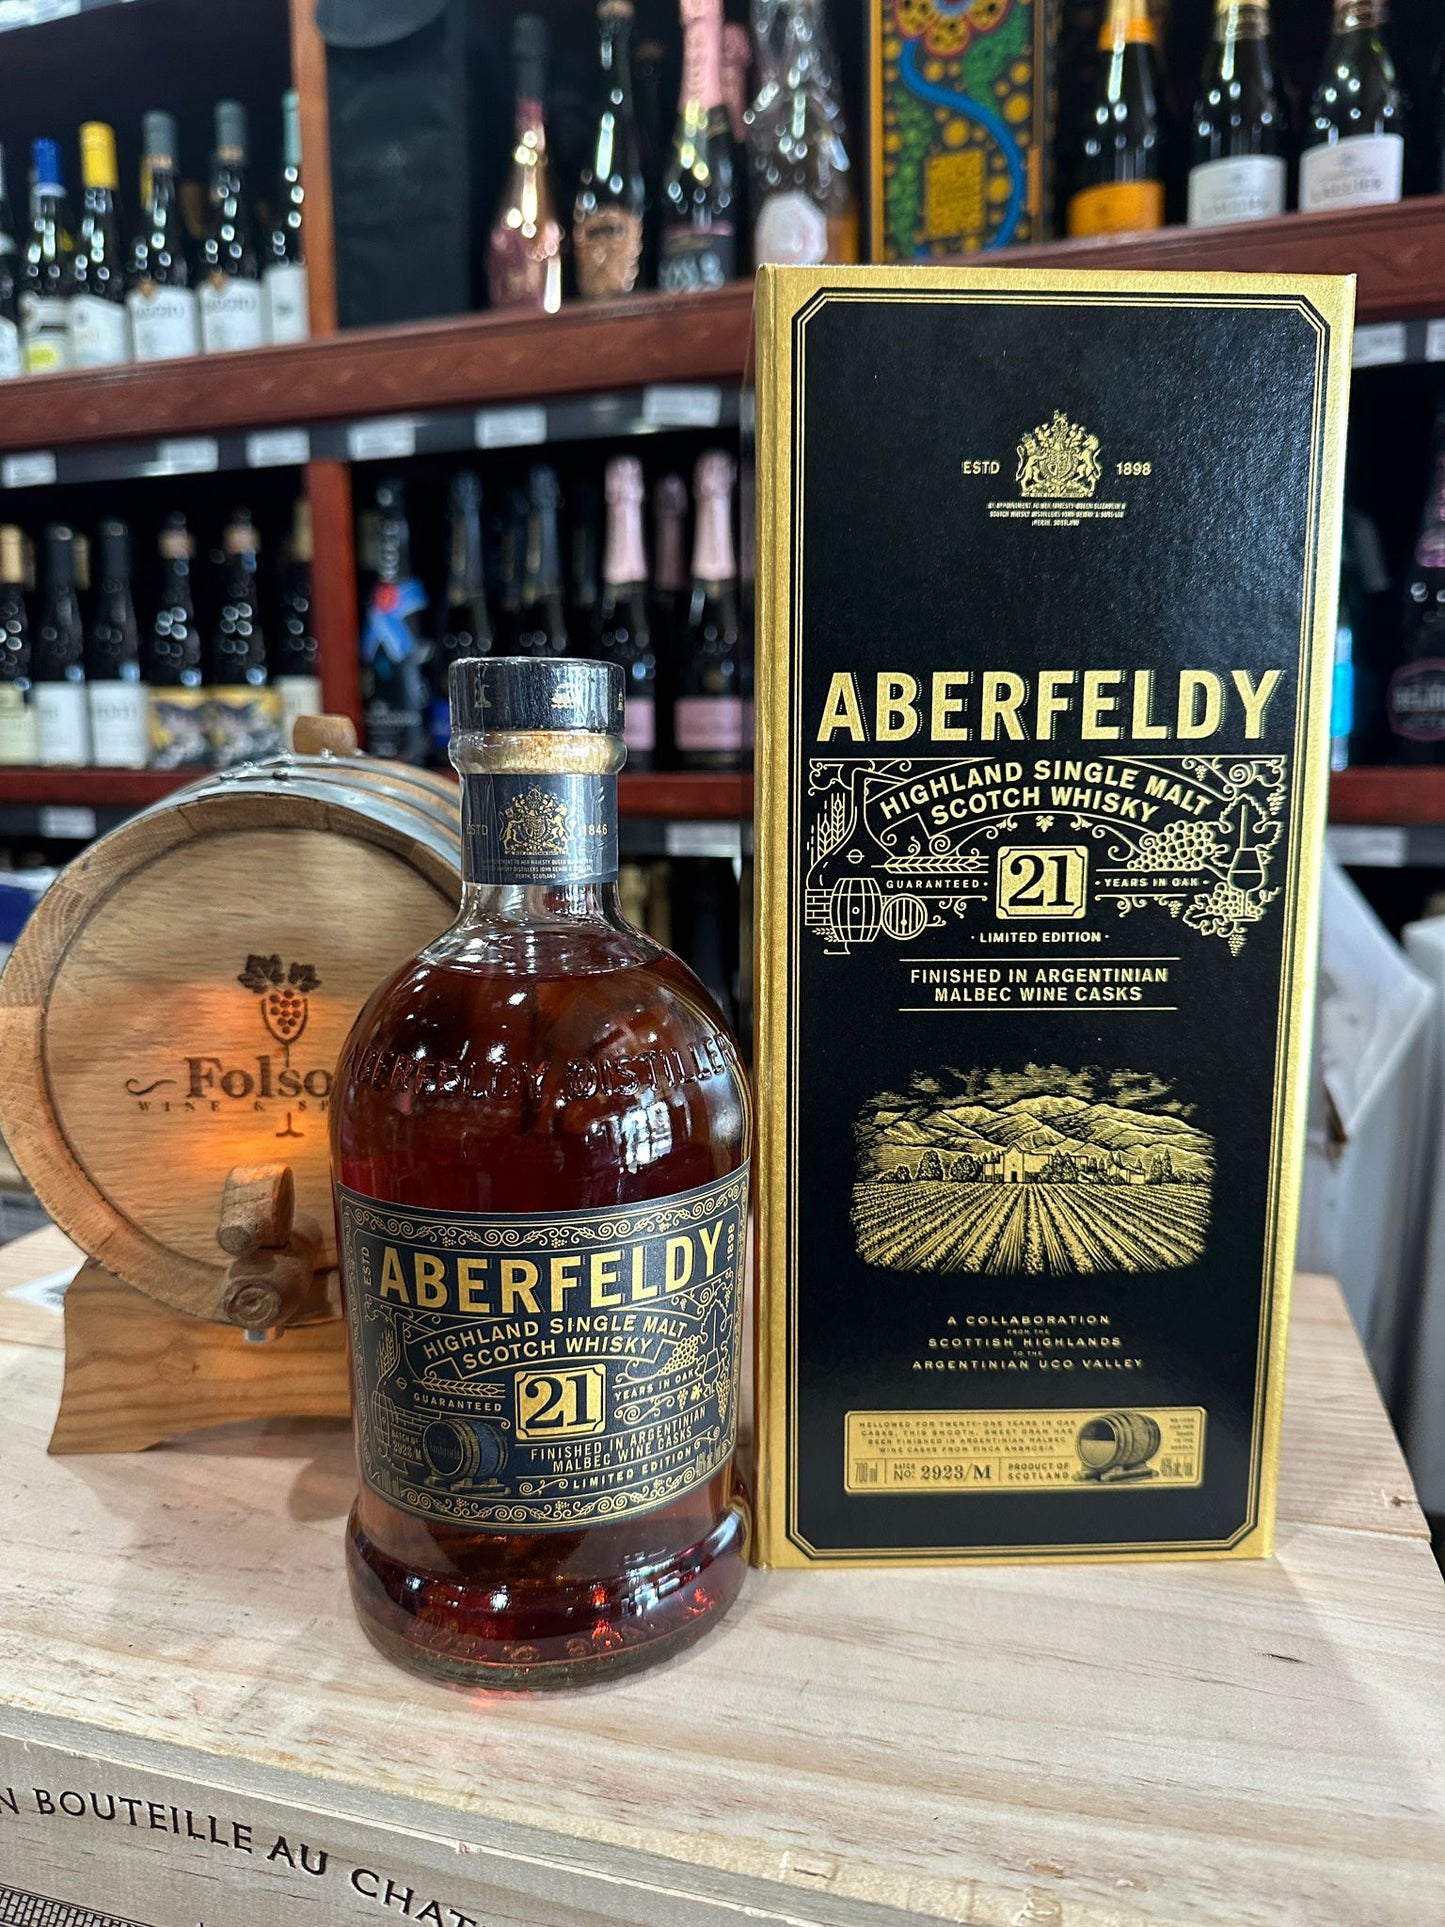 Aberfeldy 21 Year Old Single Malt Scotch Whisky 700ml